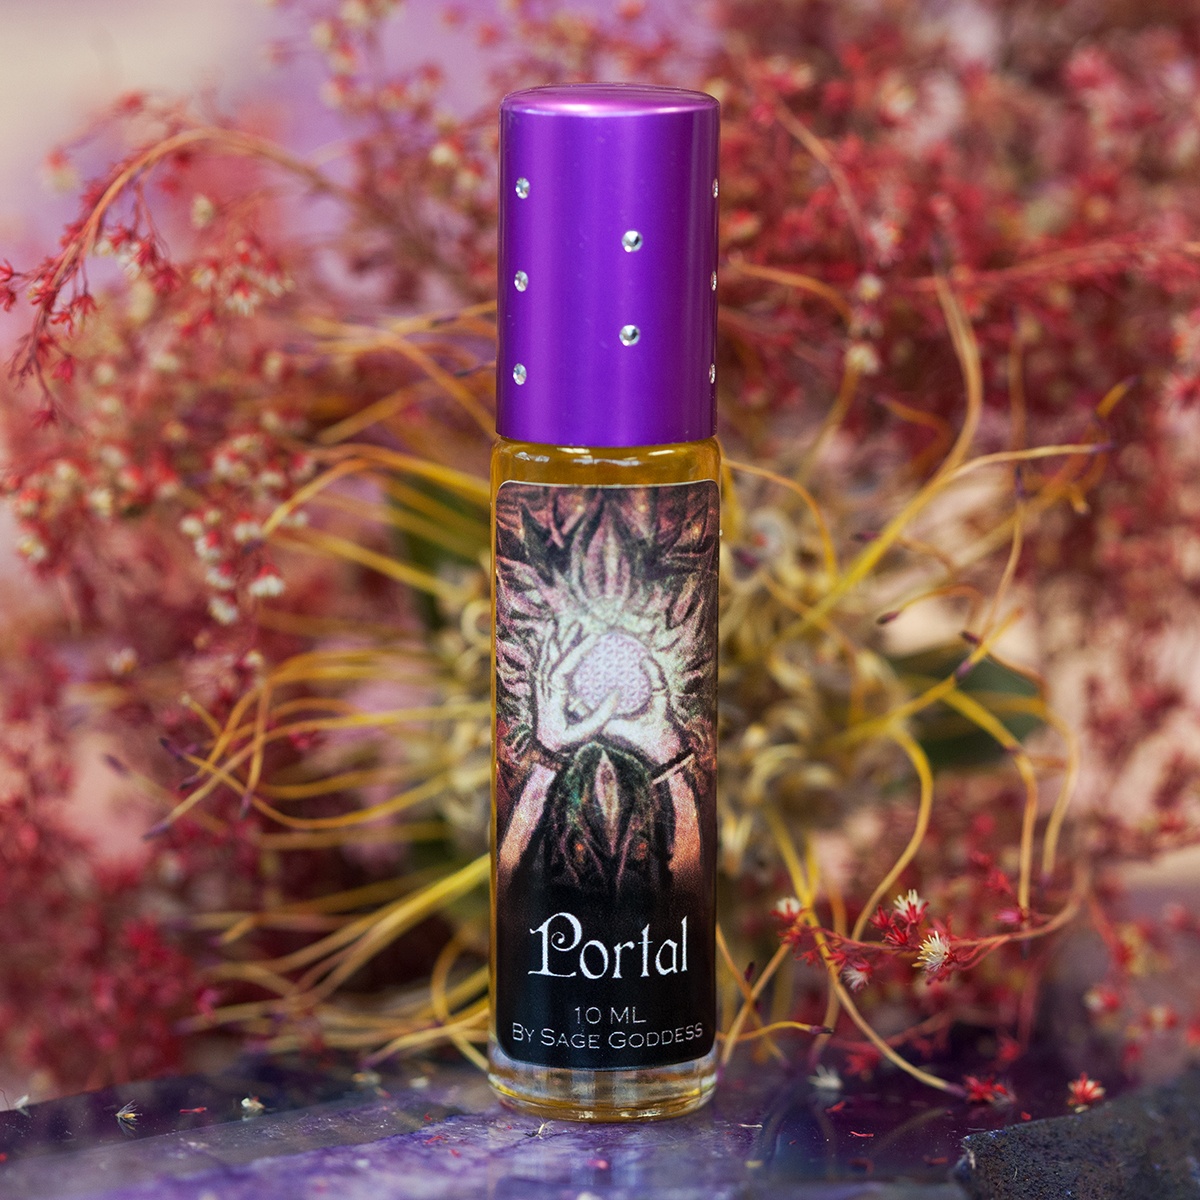 Portal Perfume with Vetiver & Dark Patchouli